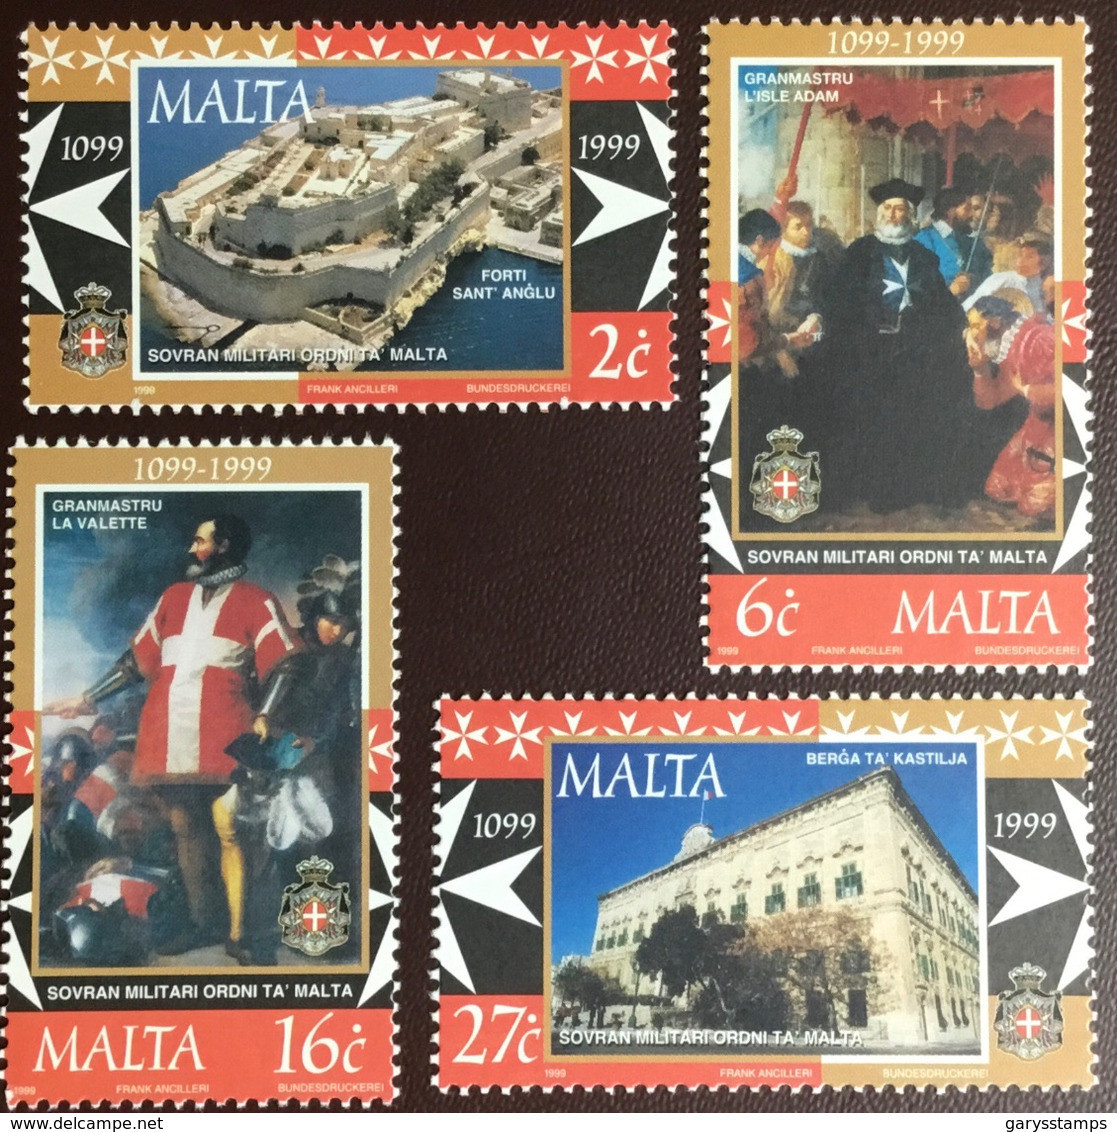 Malta 1999 Sovereign Military Order MNH - Malta